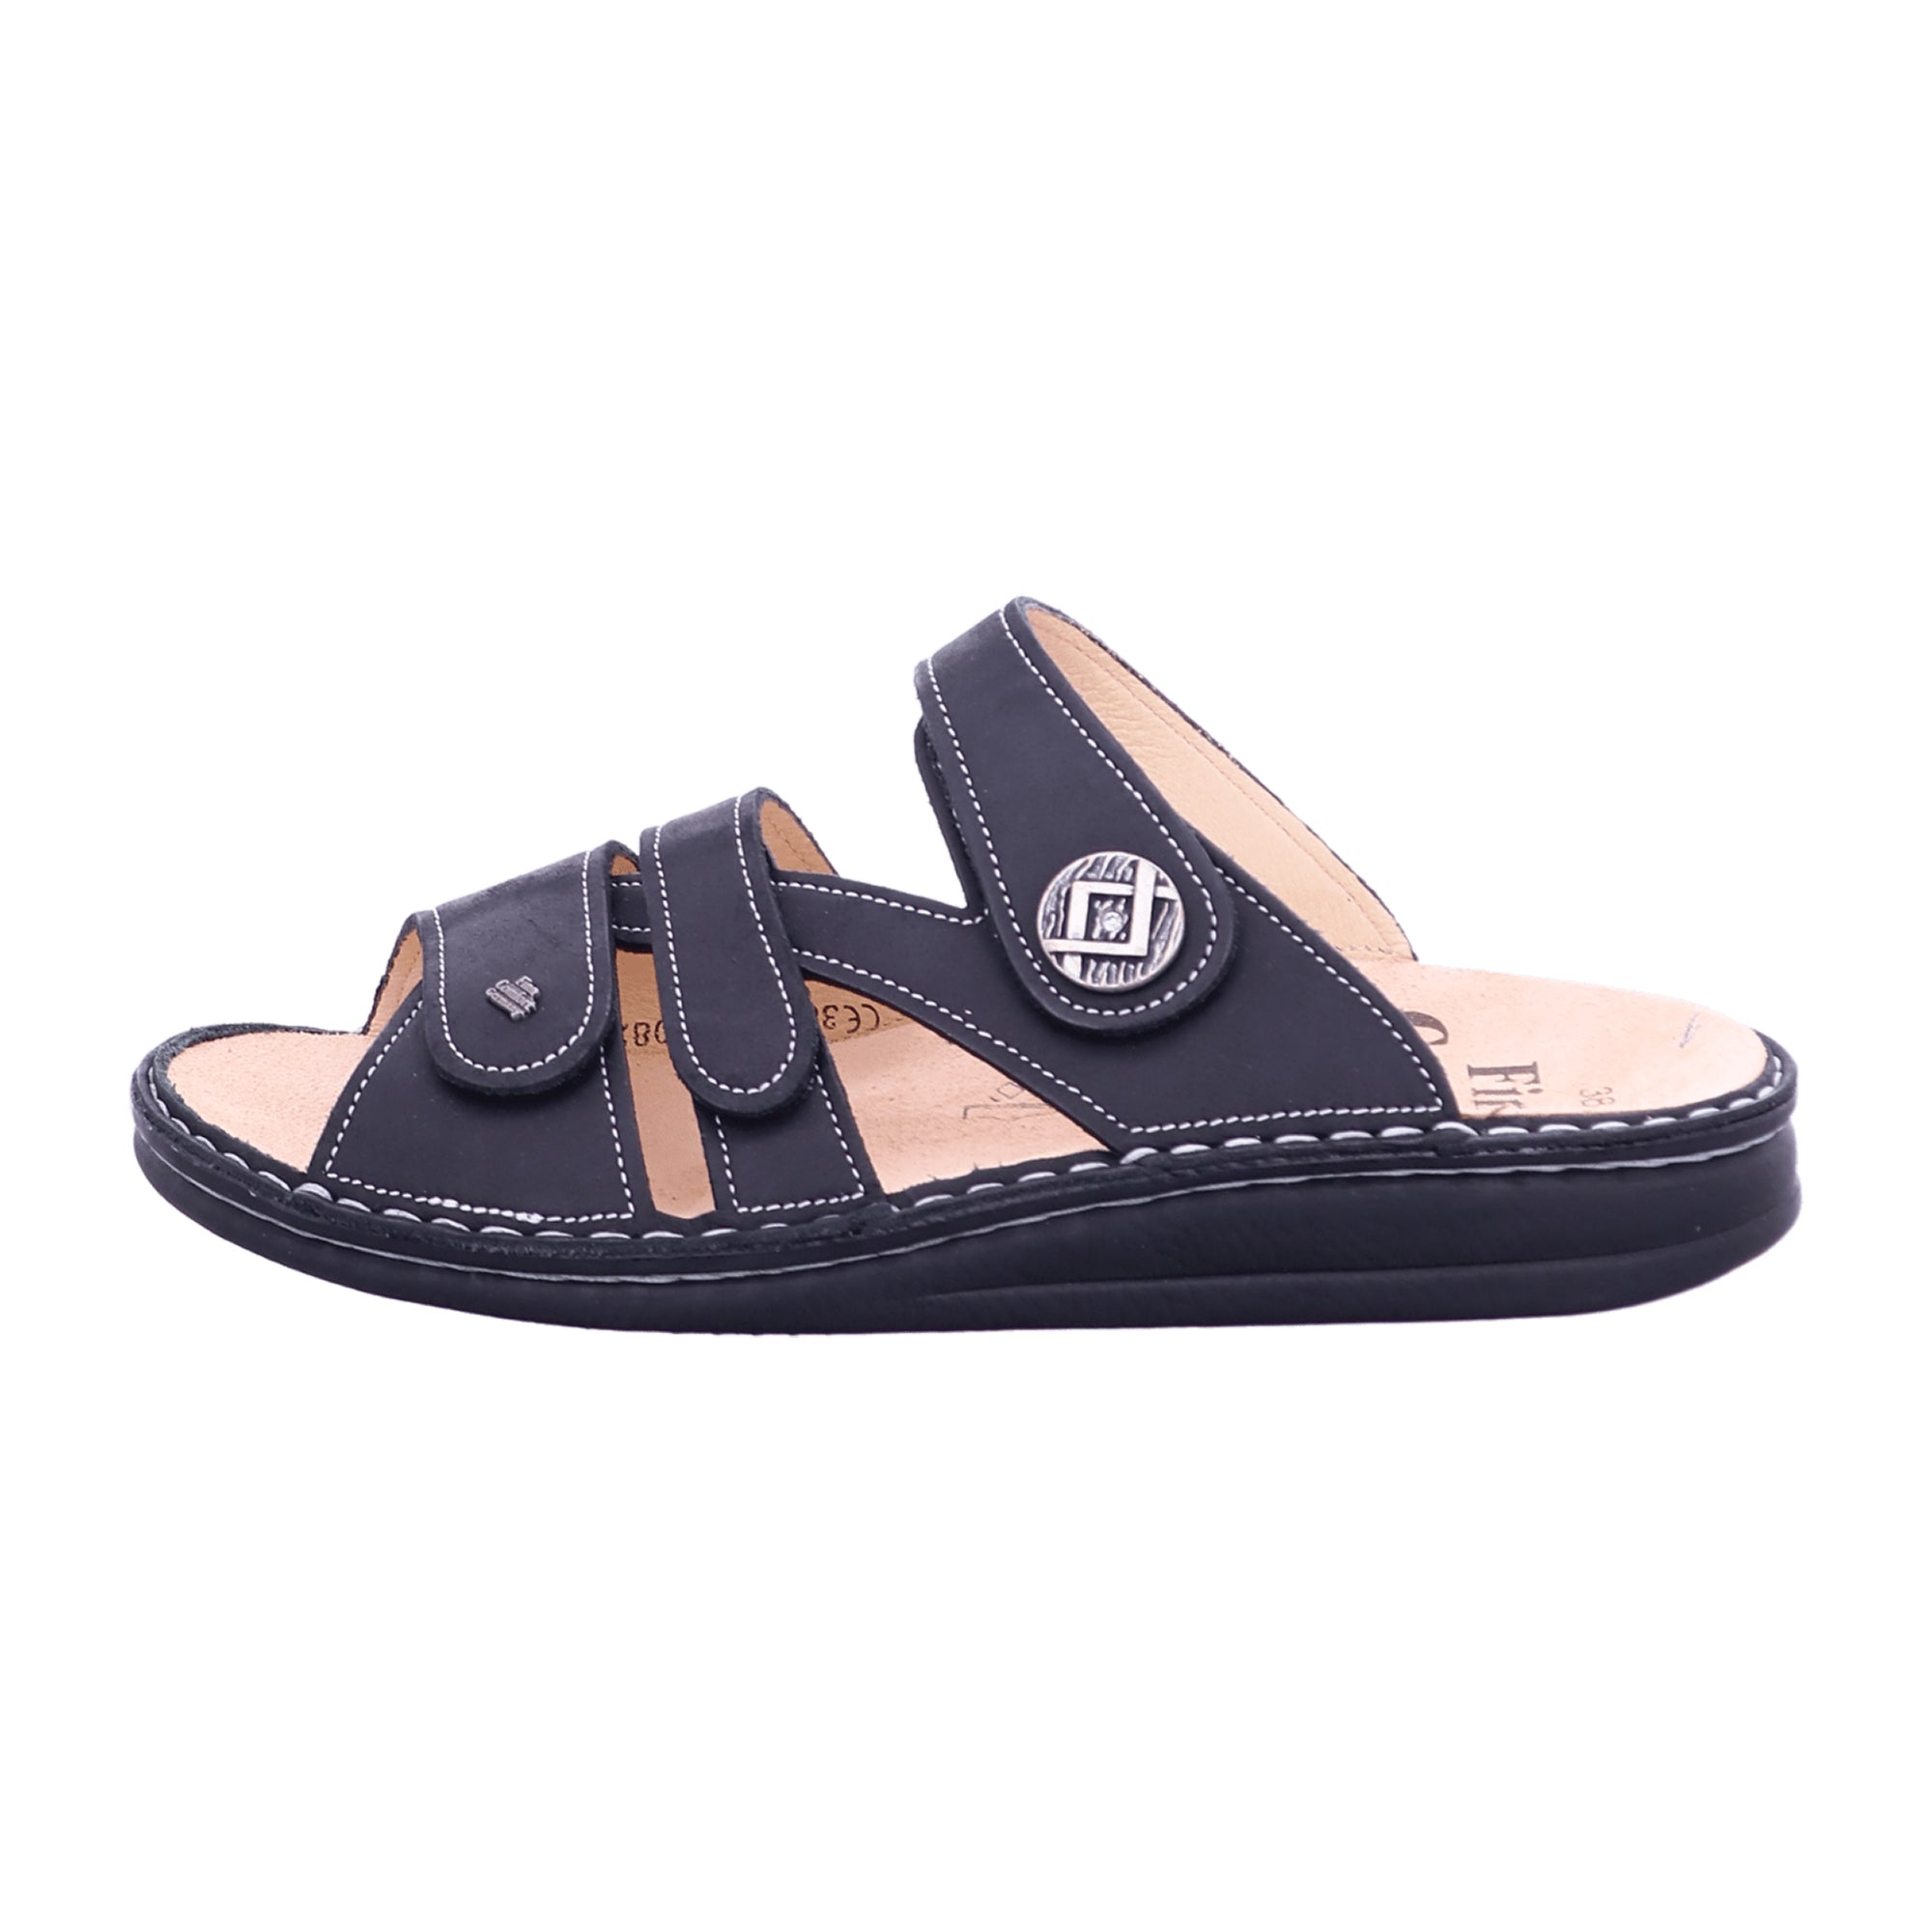 Finn Comfort Agueda Women's Black Comfort Shoes - Stylish & Durable